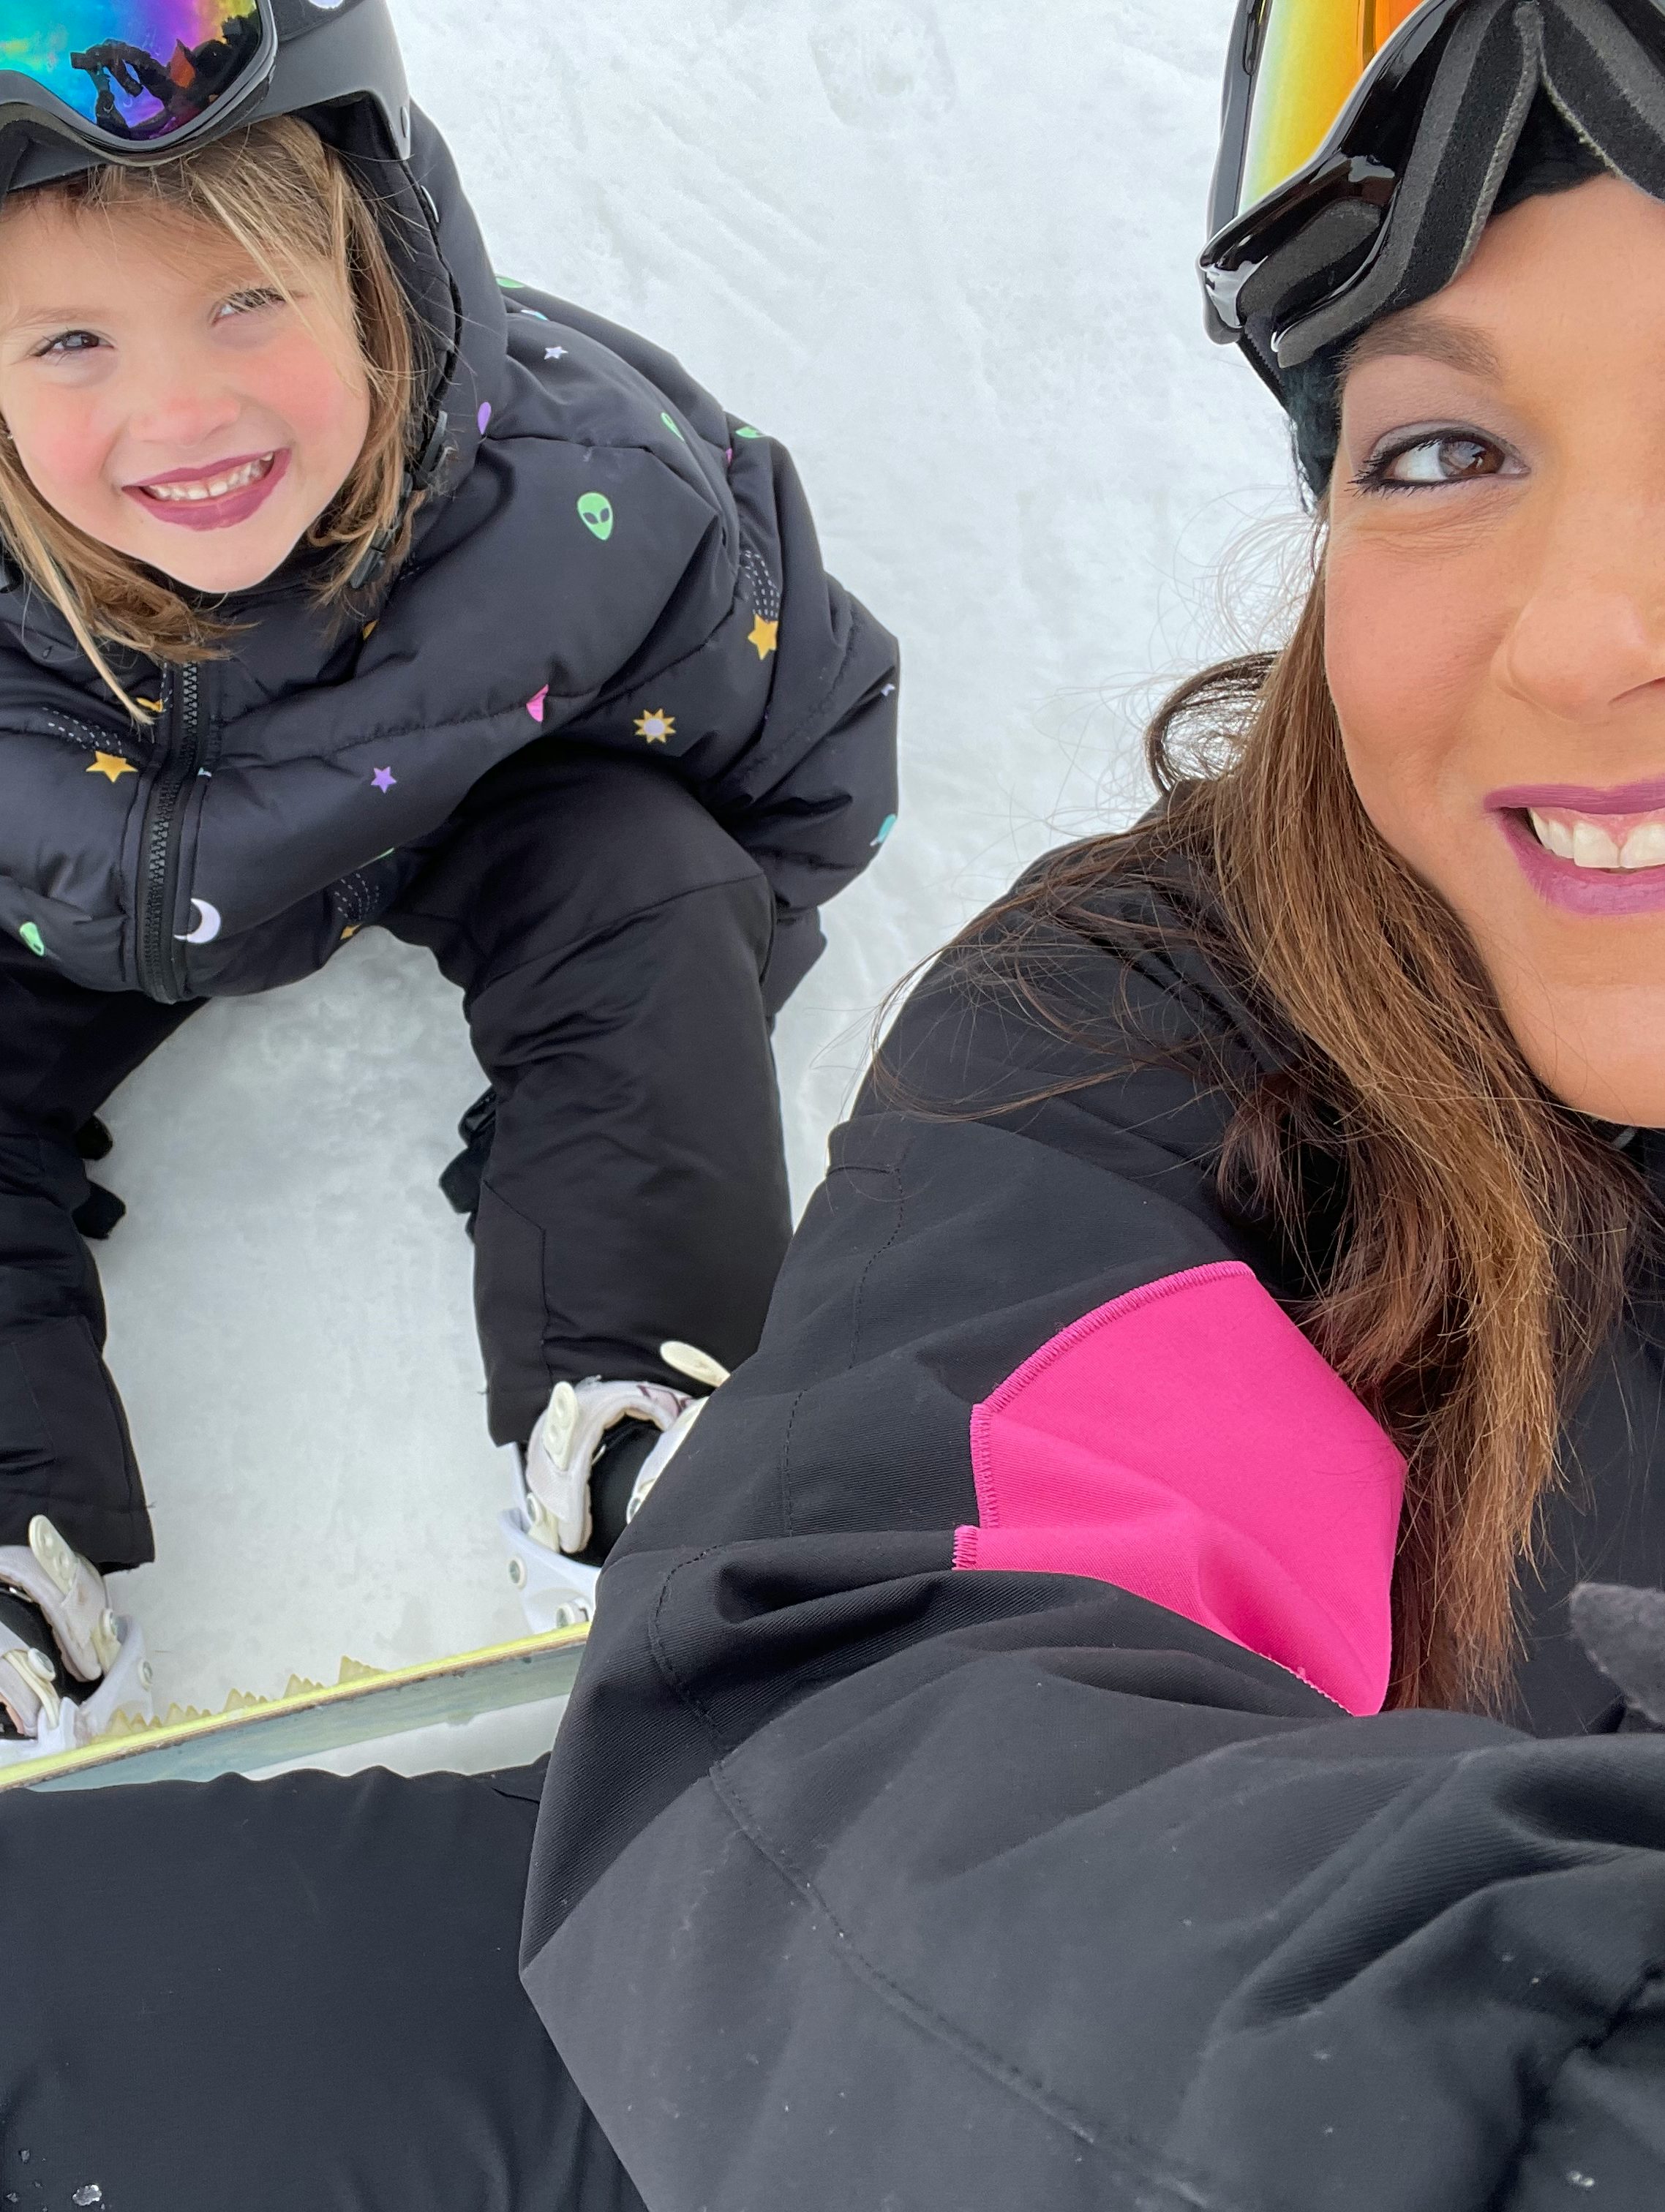 Gear – The Snowboard Mom